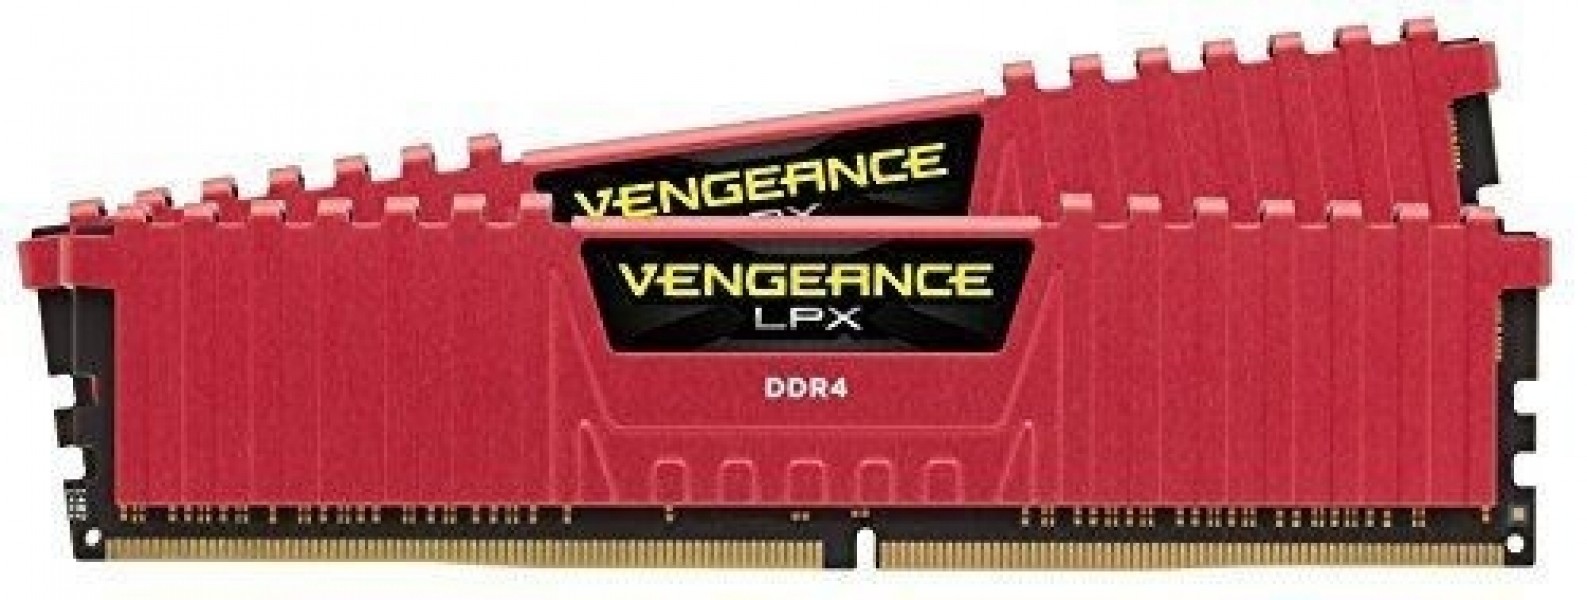 Corsair Vengeance LPX 16GB 3000MHz DDR4 CL15 KIT OF 2 CMK16GX4M2B3000C15R